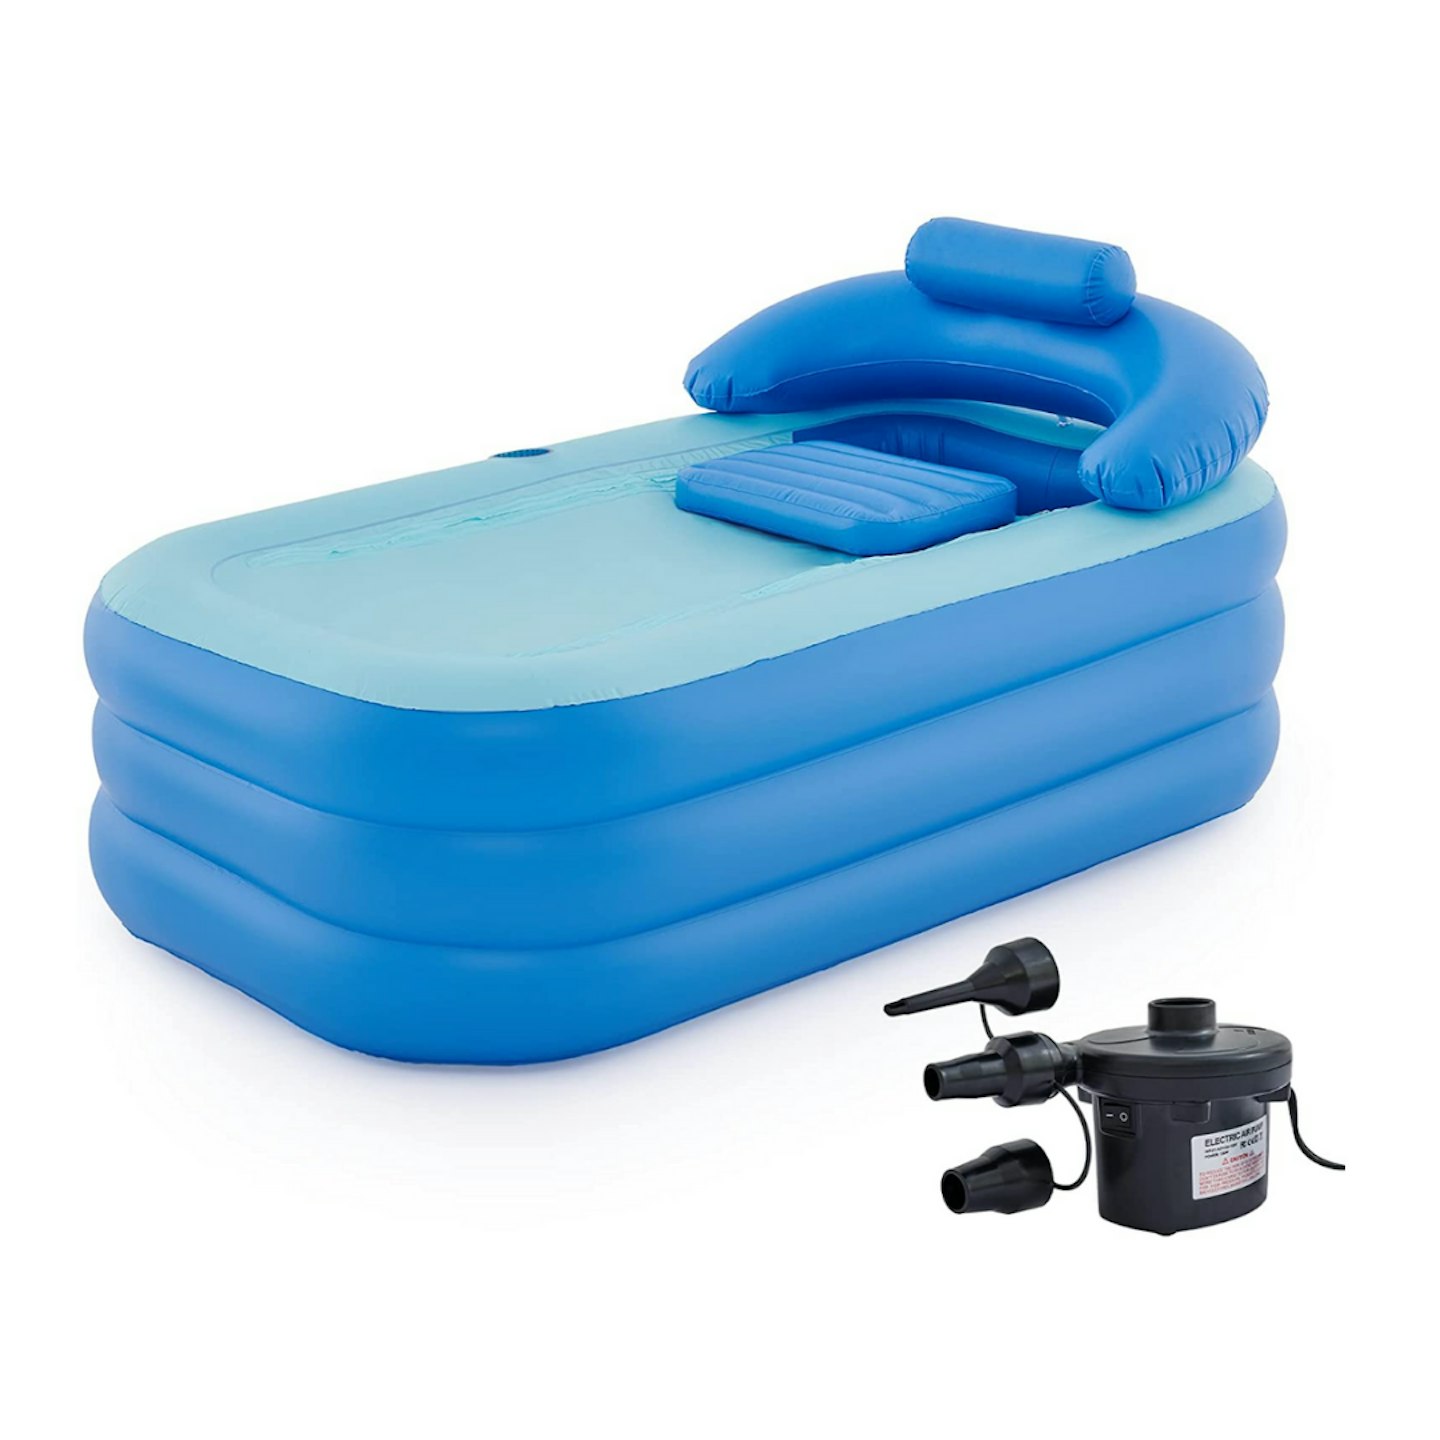 CO-Z Inflatable Portable Adult Bath Tub